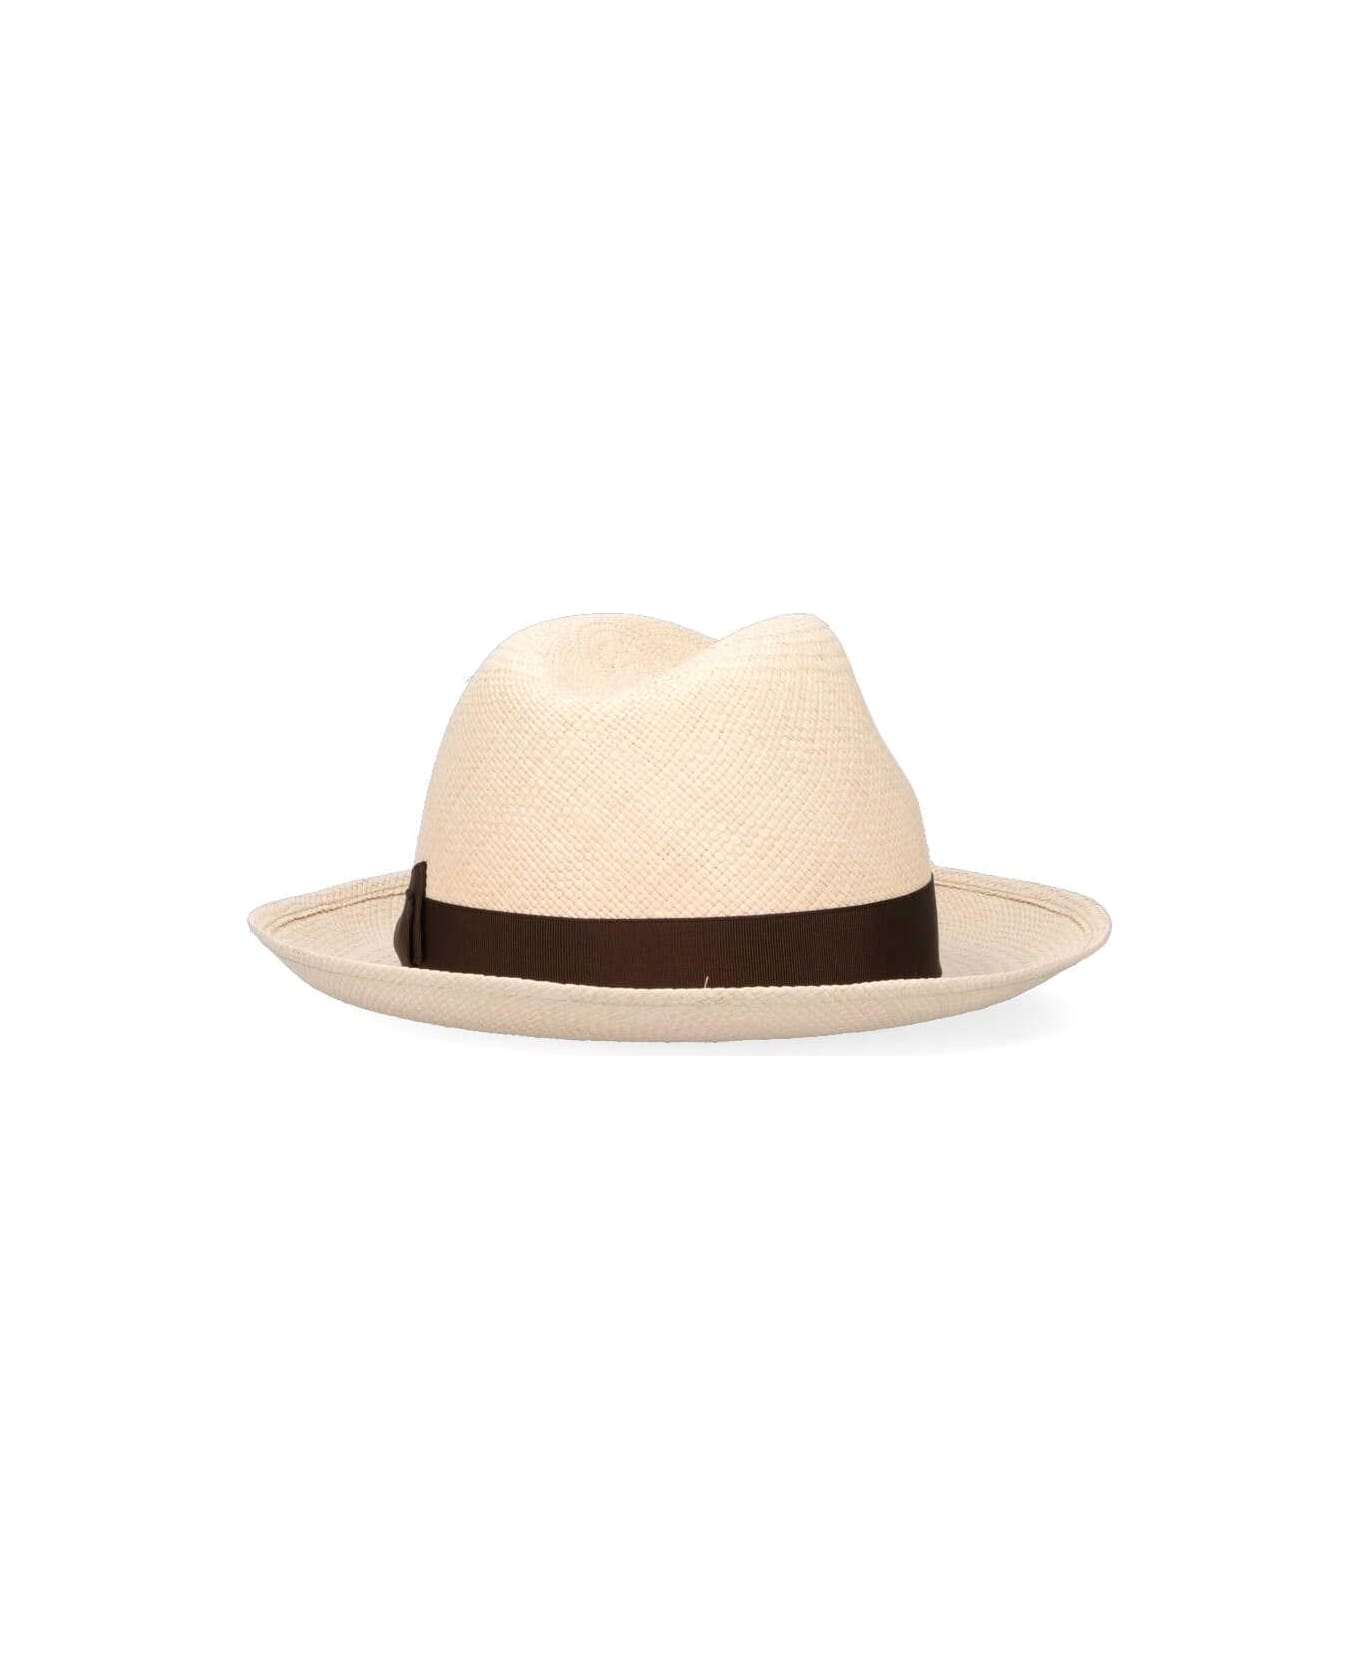 Borsalino 'panama' Hat - Naturale 帽子